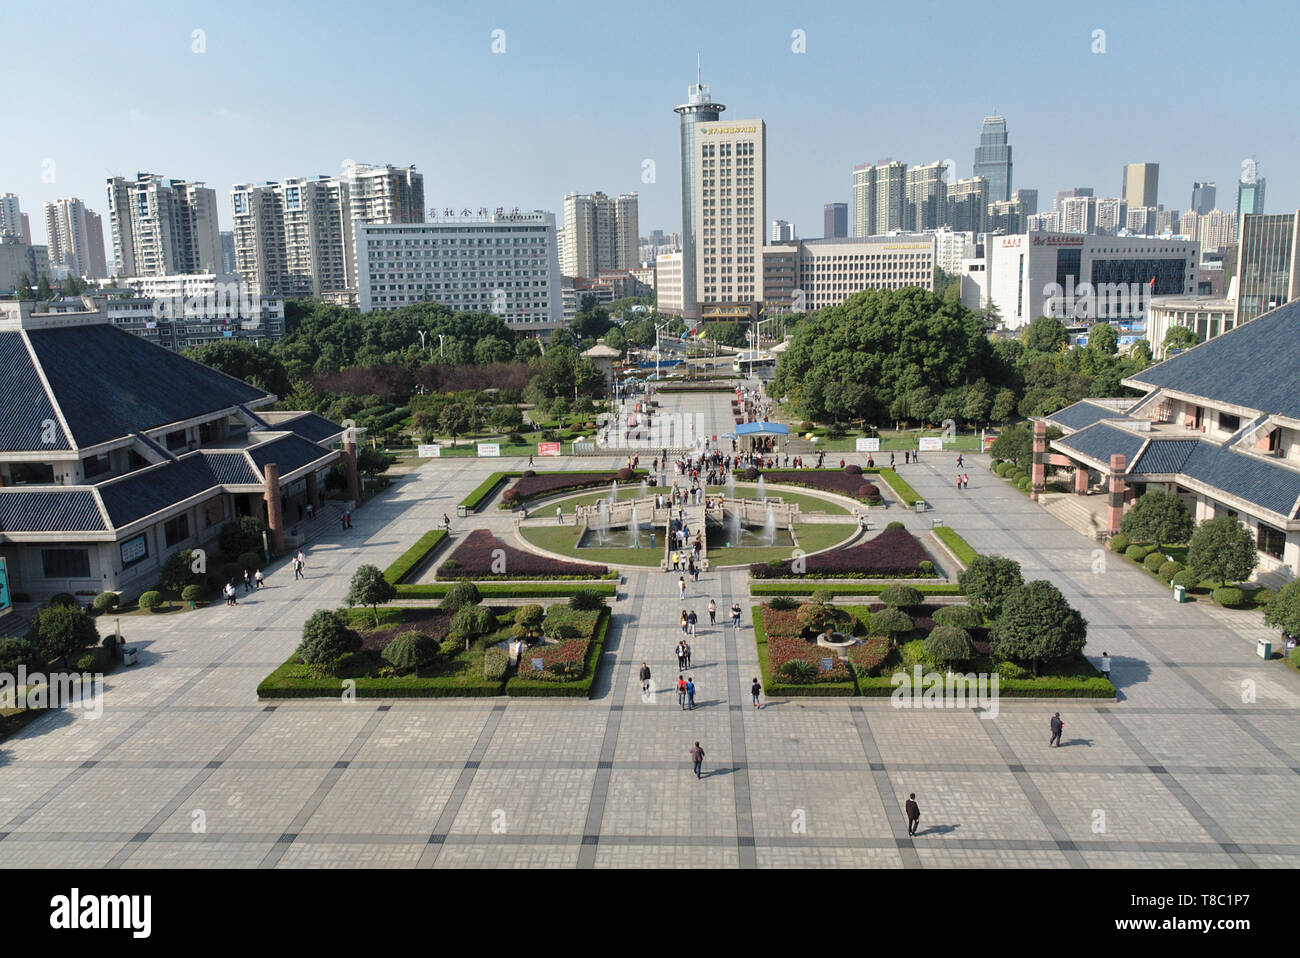 Courtyard of Hubei Provincial Museum in Wuhan, China Stock Photo